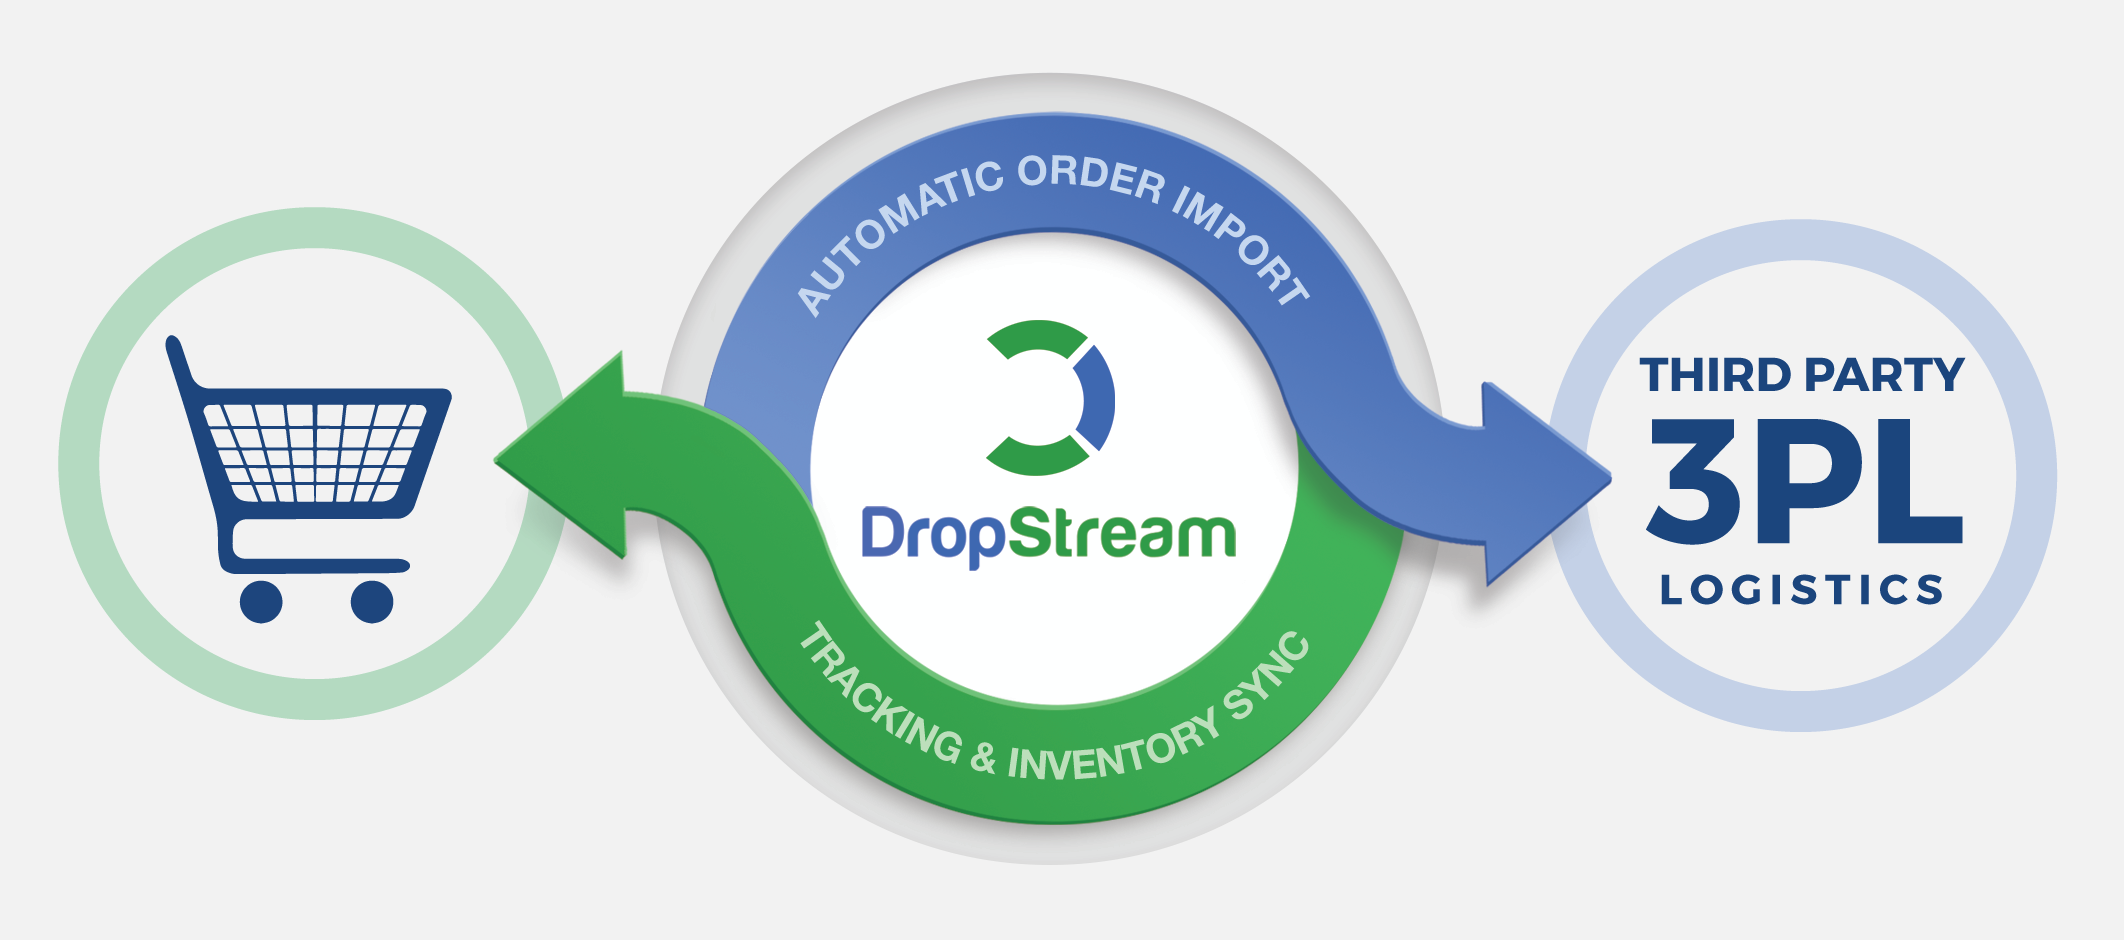 DropStream - Workflow